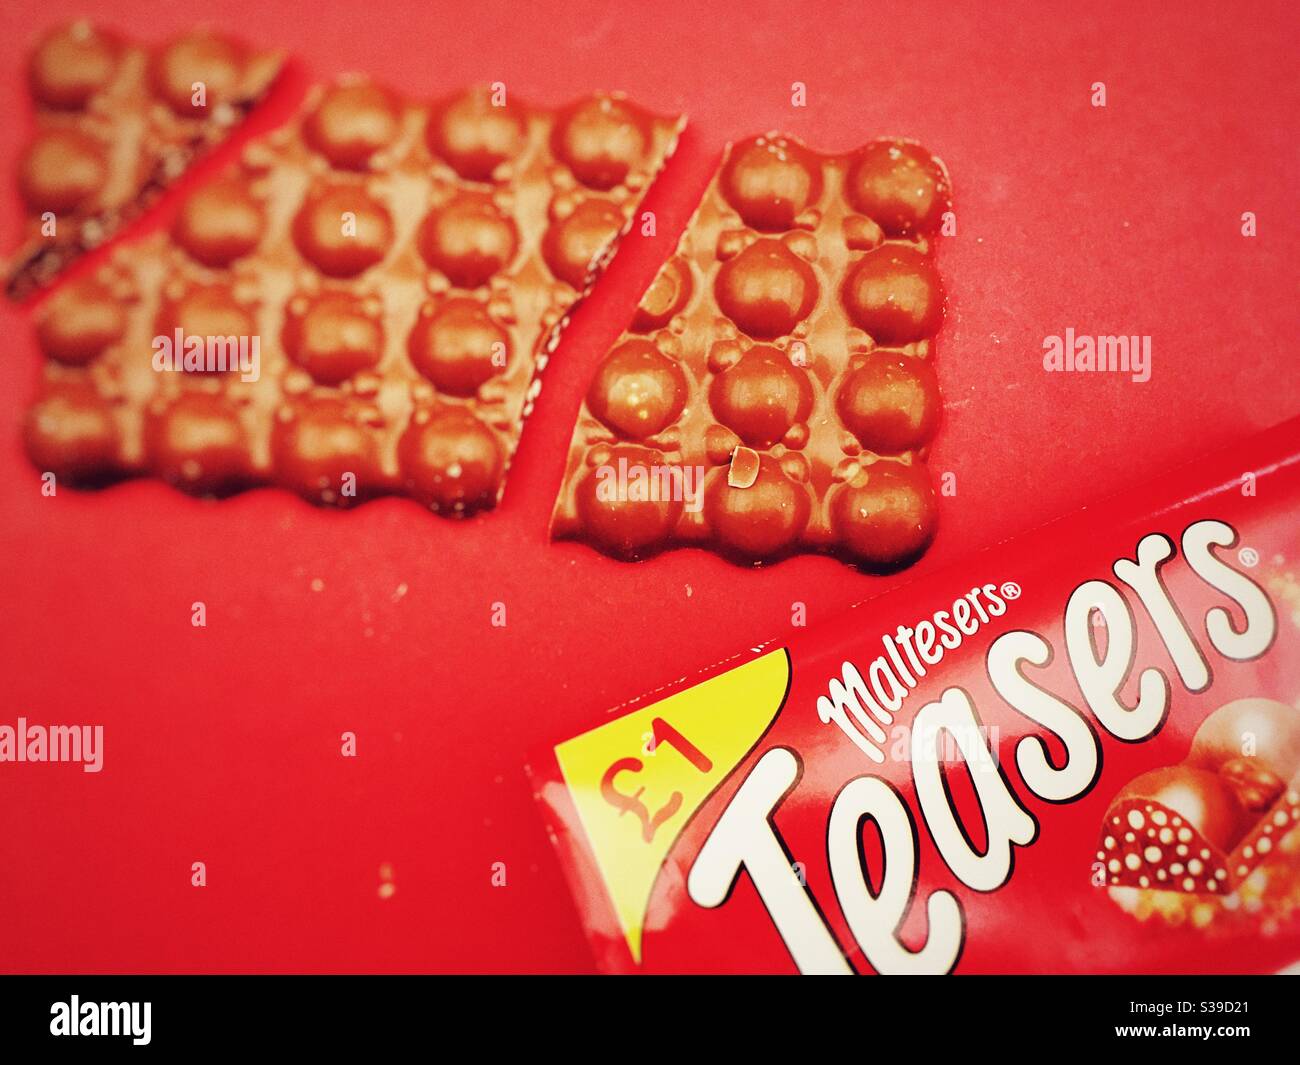 Maltesers Teasers chocolate bar Stock Photo - Alamy